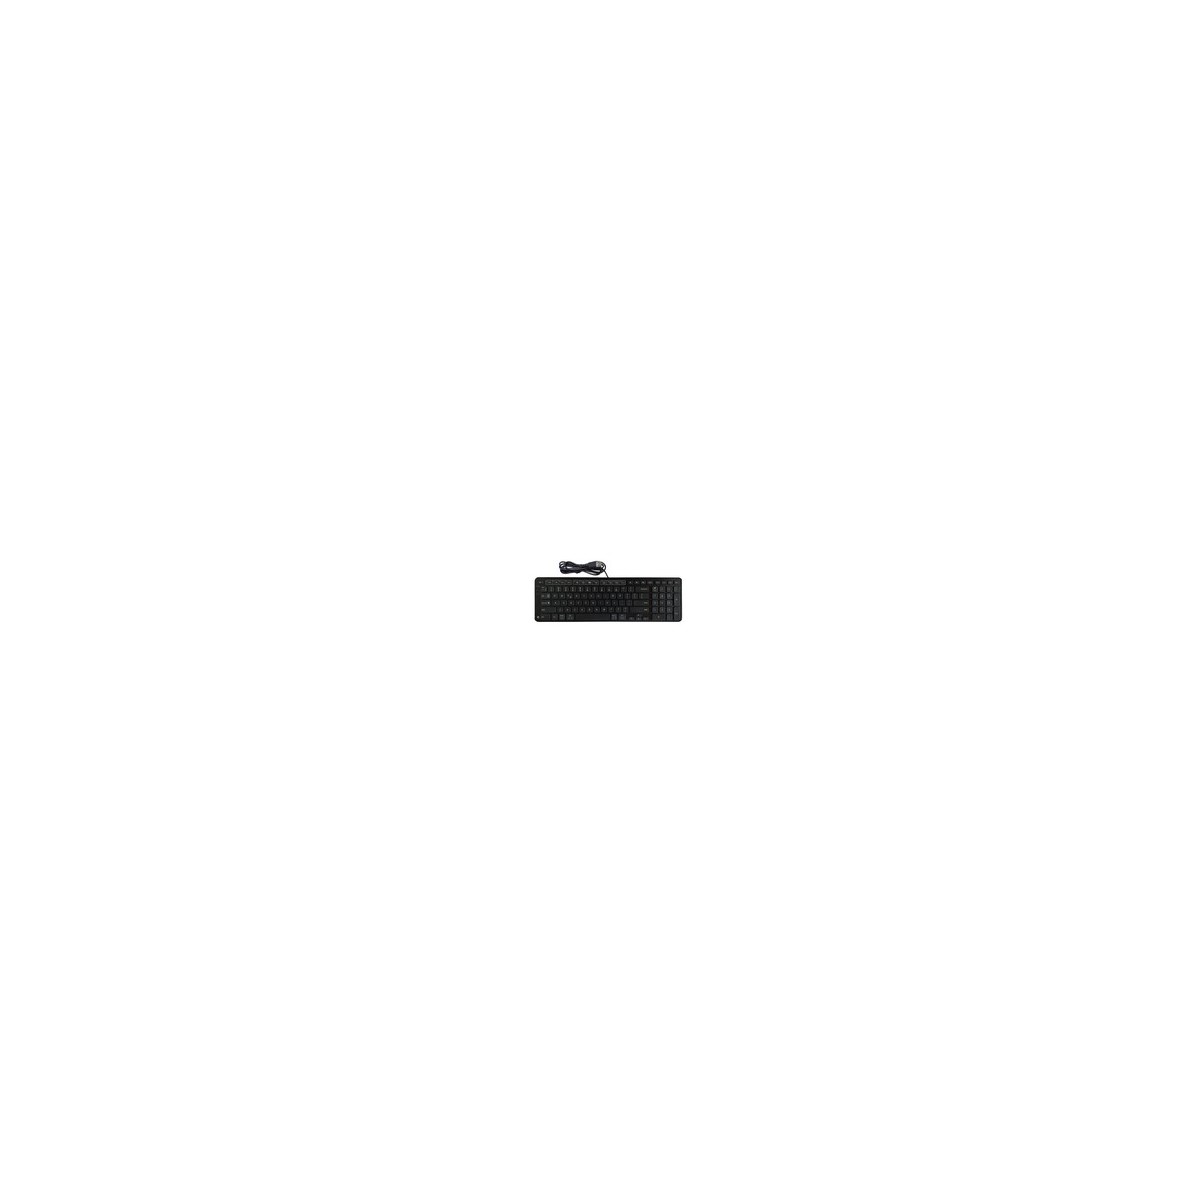 Contour Design Balance Keyboard BK Wired-US Version - Full-size (100%) - USB - QWERTY - Black